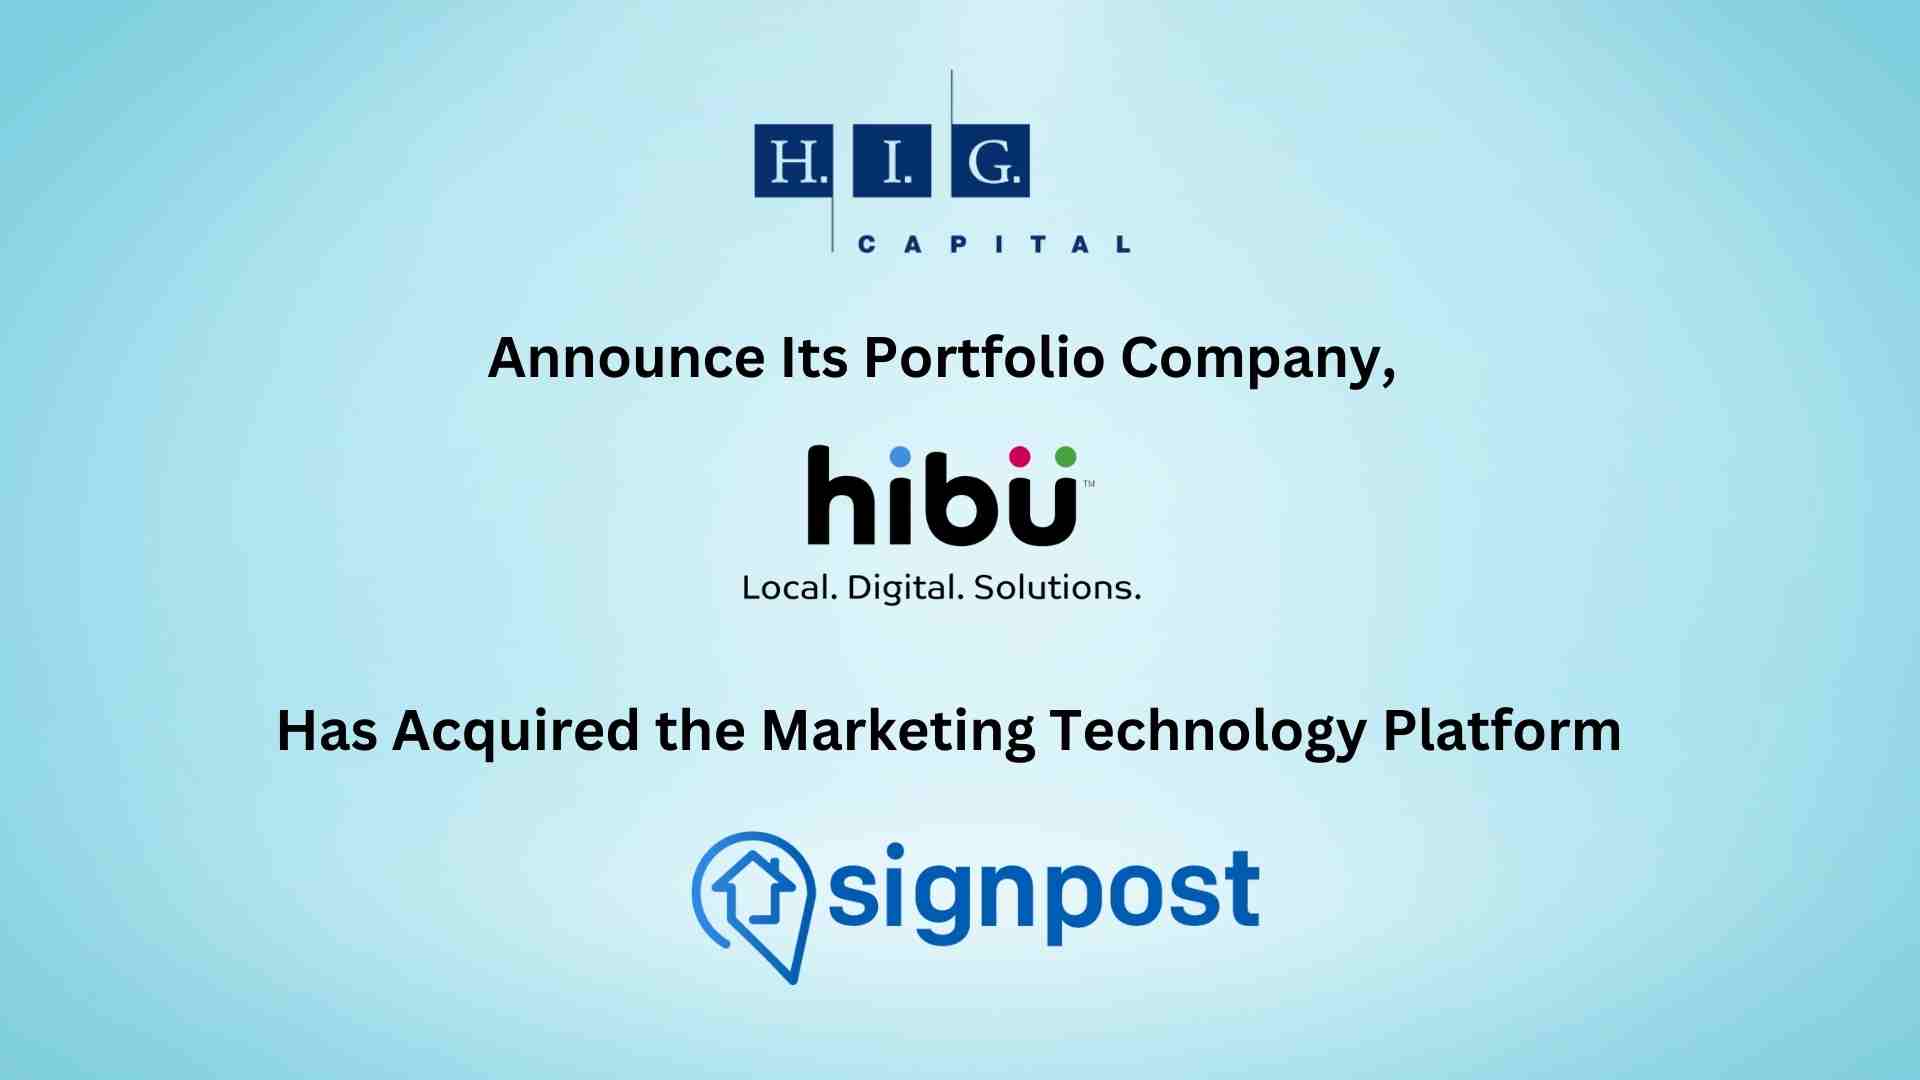 Hibu, an H.I.G. Portfolio Company, Acquires Marketing Technology Platform of Signpost Inc.